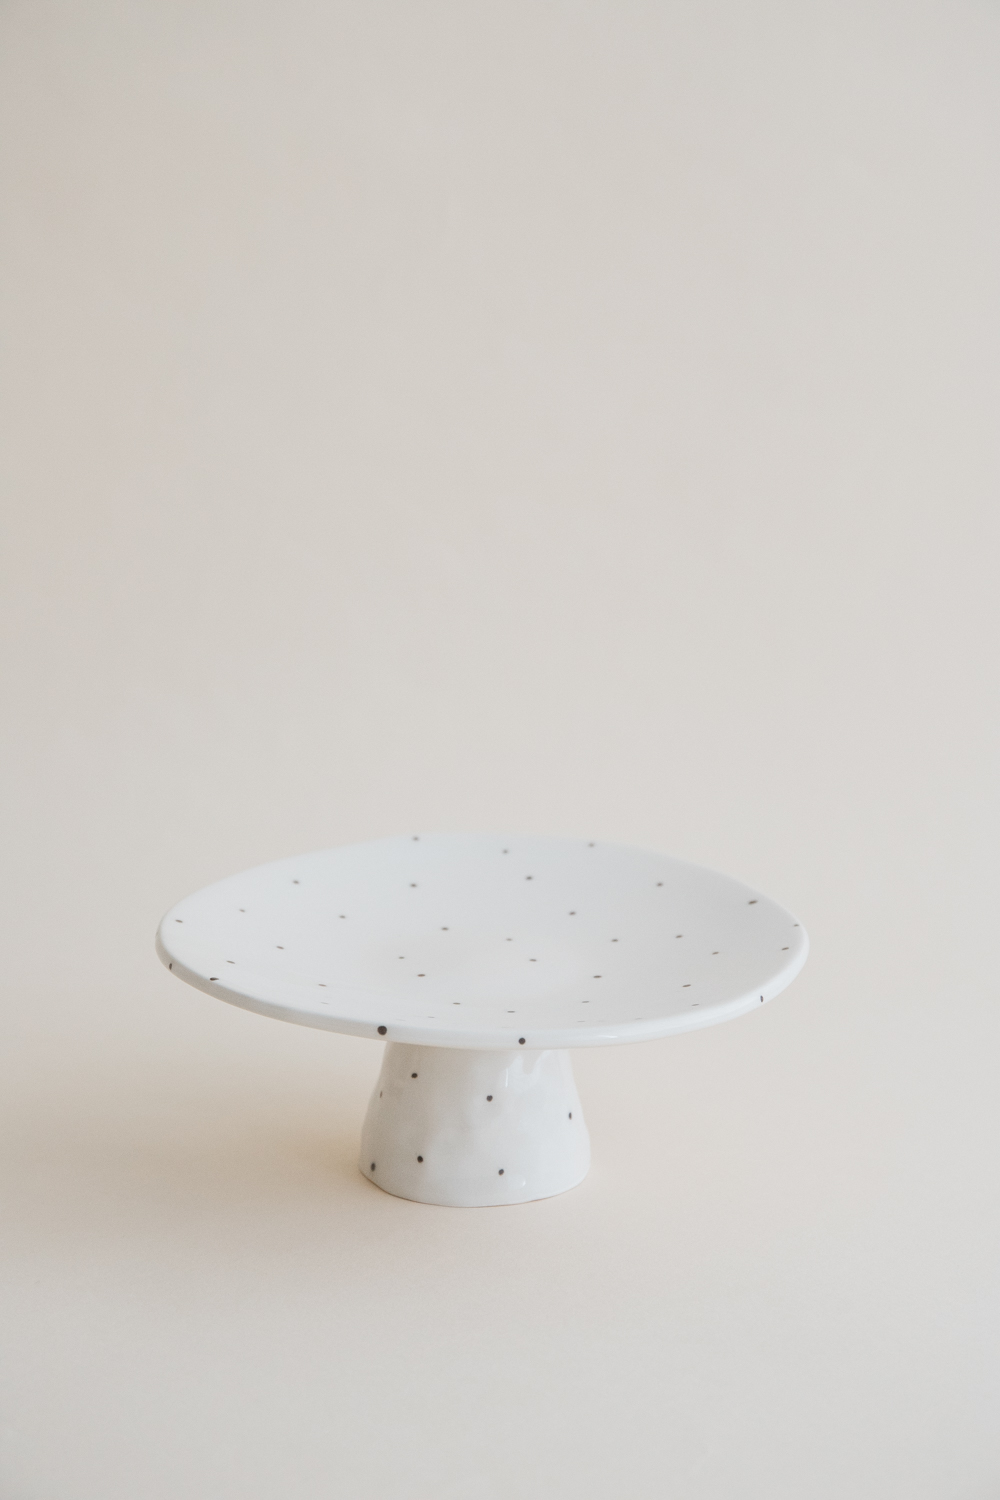 Big Handmade Ceramic Cookie Stand - Polka Dot